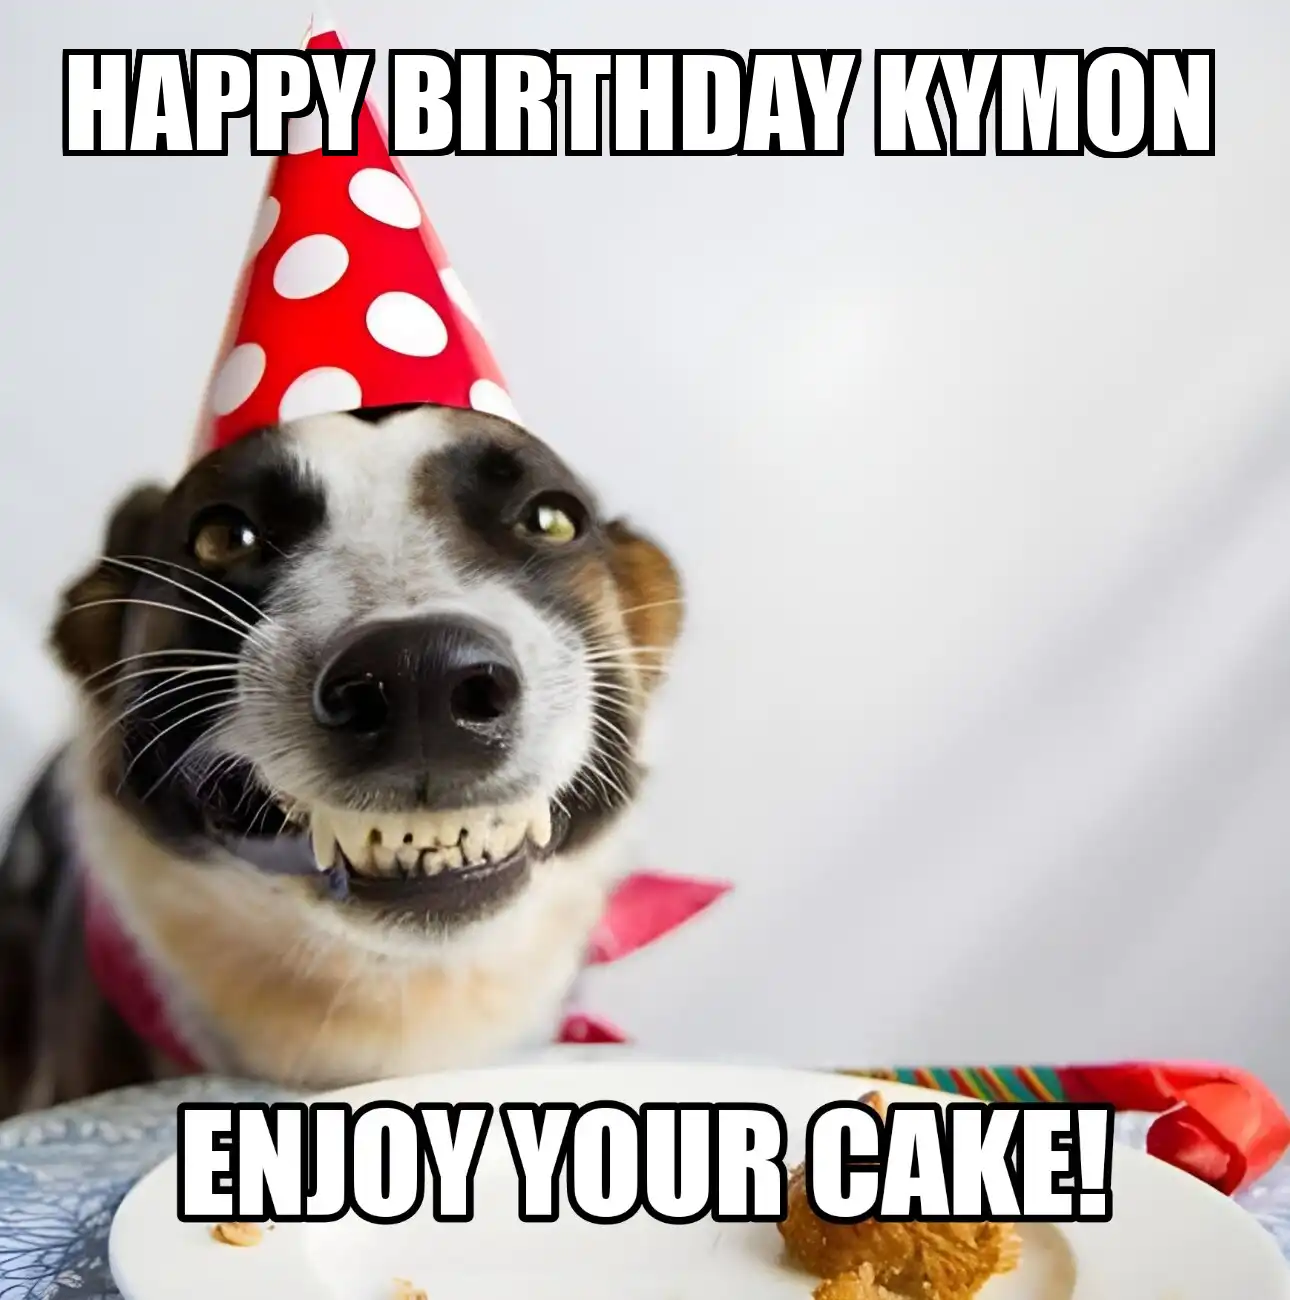 Happy Birthday Kymon Enjoy Your Cake Dog Meme